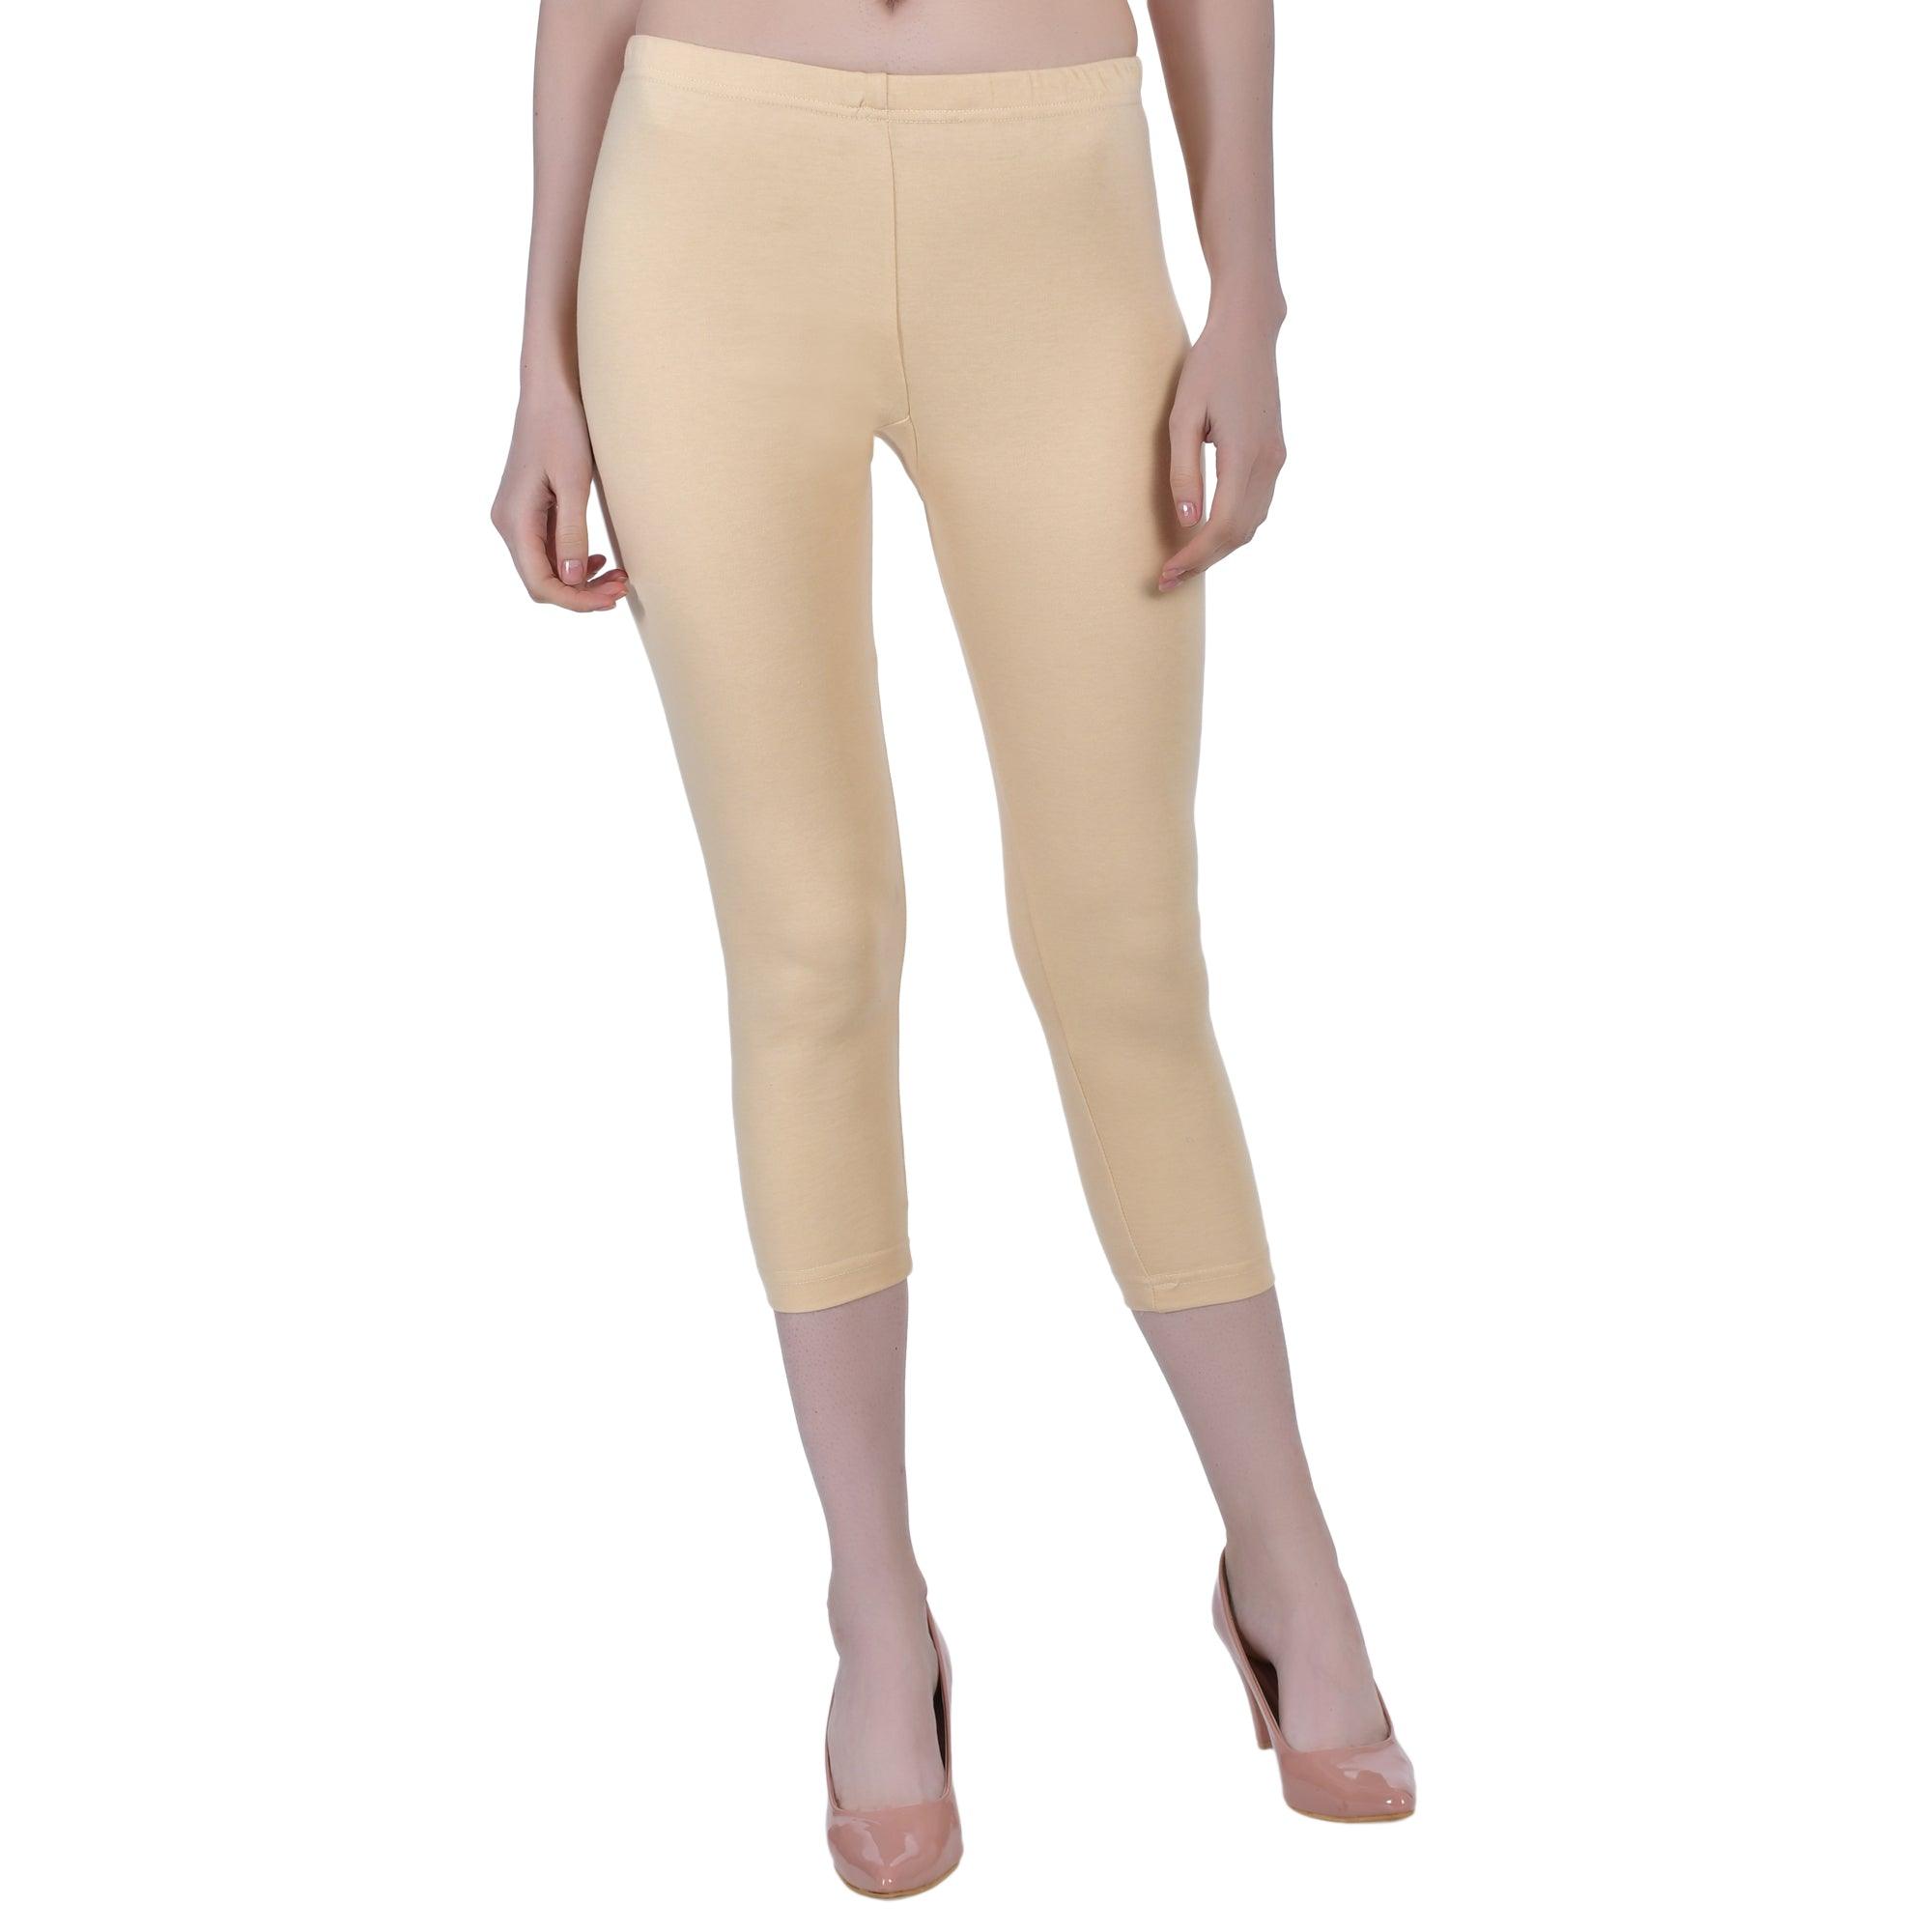 S-Cream Colors) Women Yoga Pants High Waist Tummy Control Hip Lift Gym |  eBay